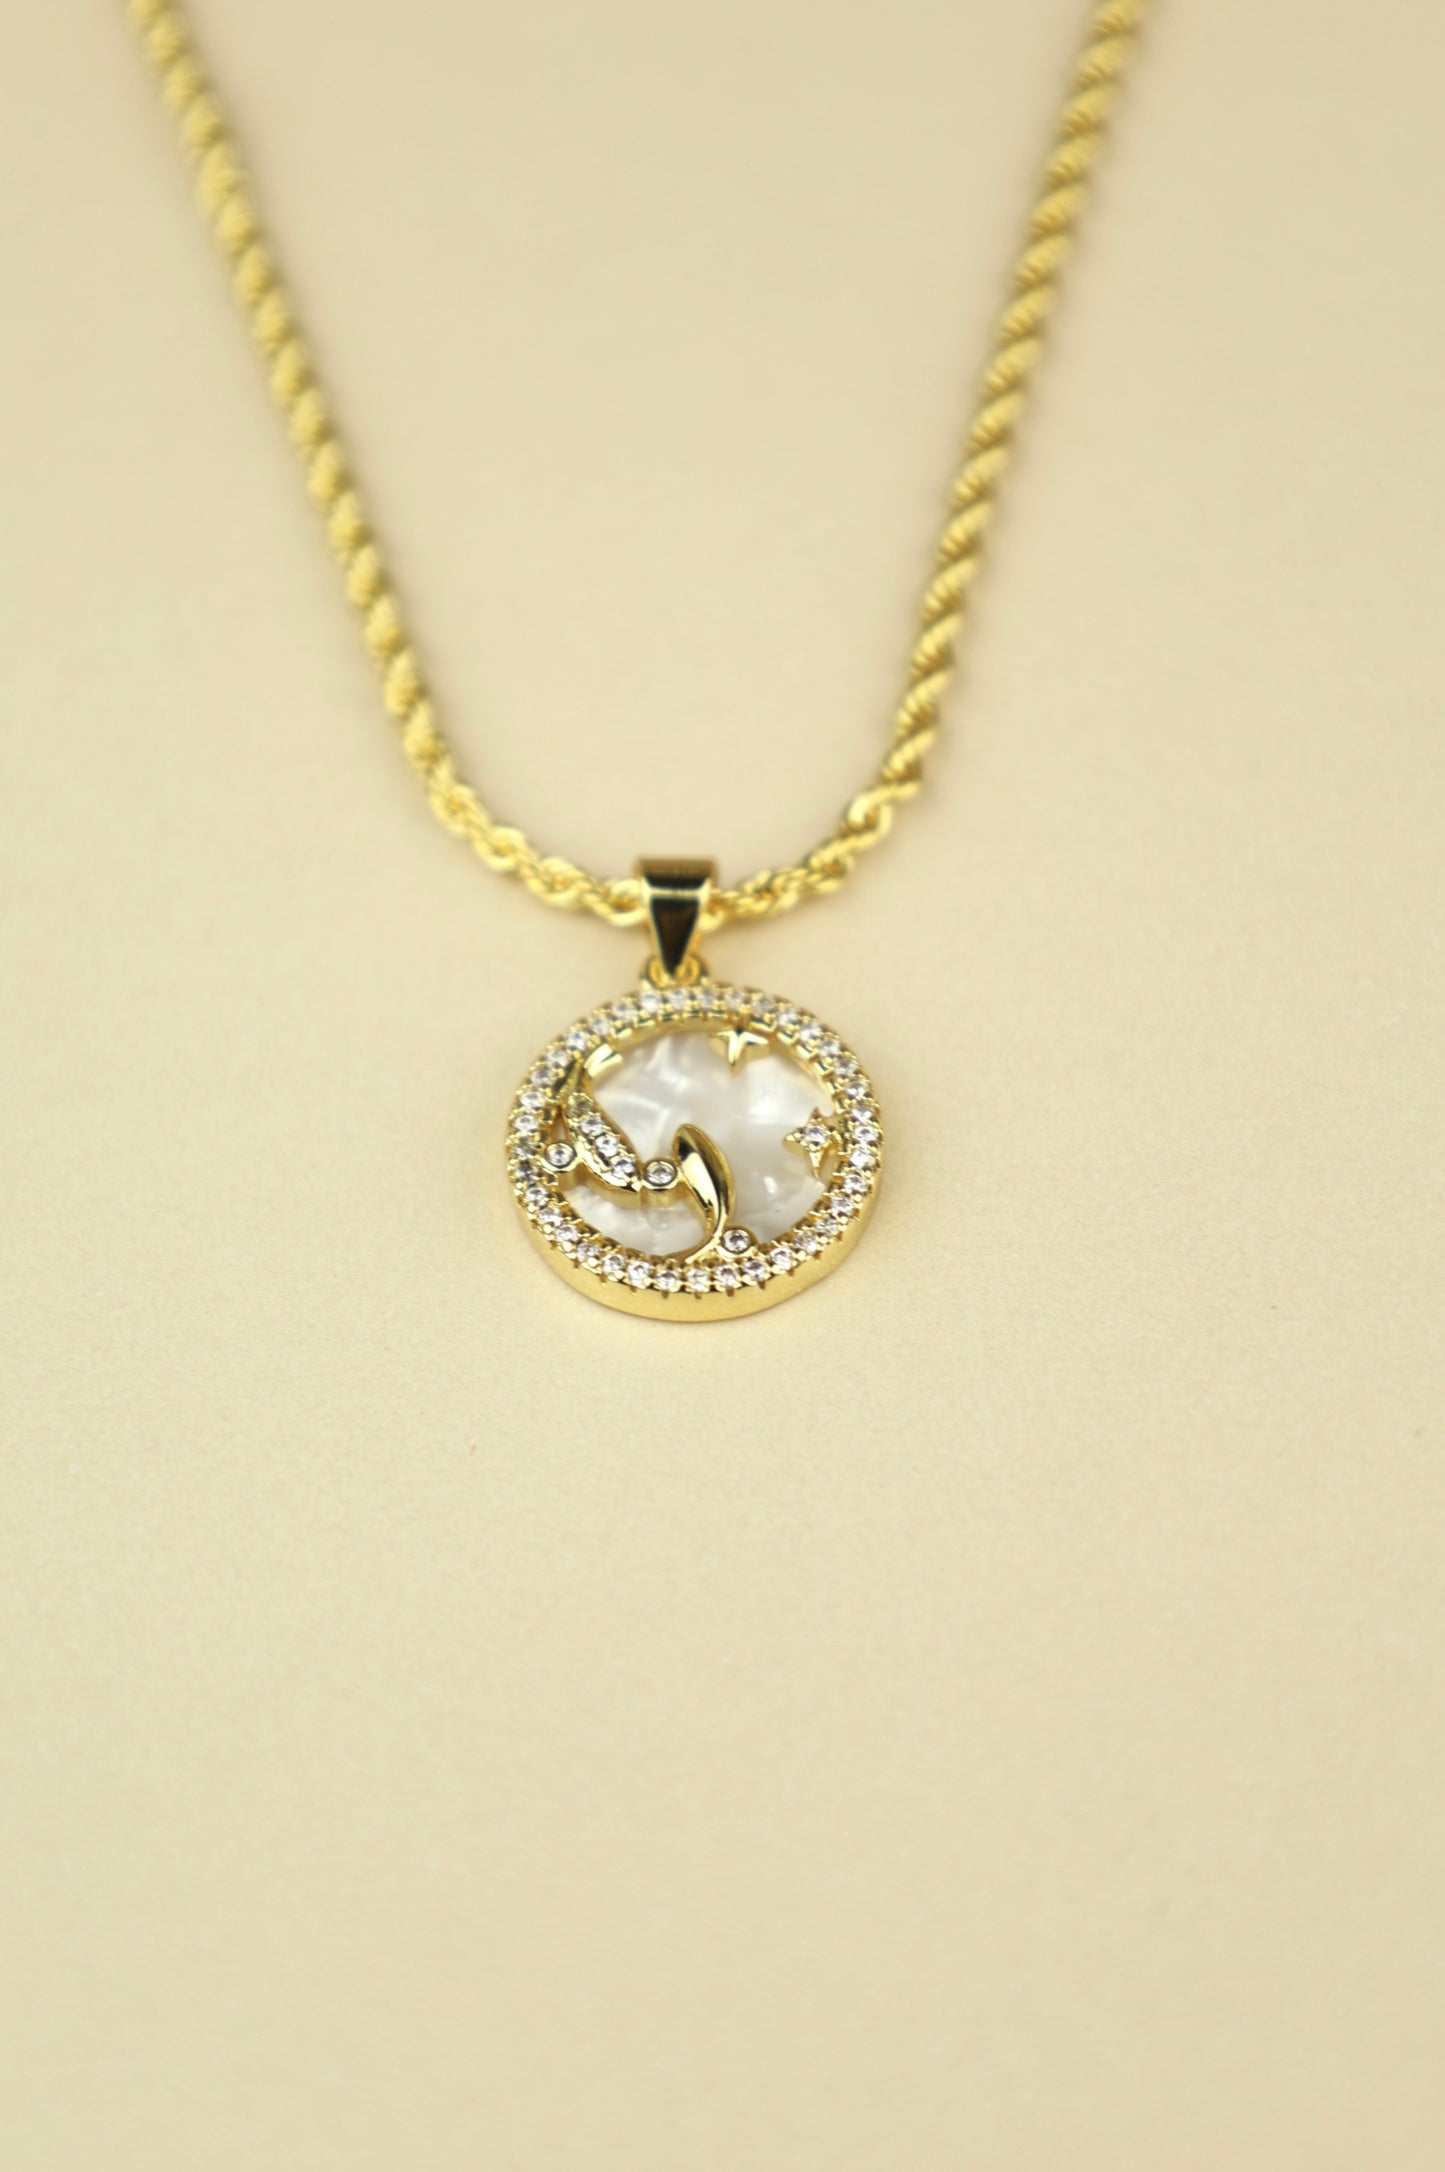 Aquarius zodiac necklace in gold